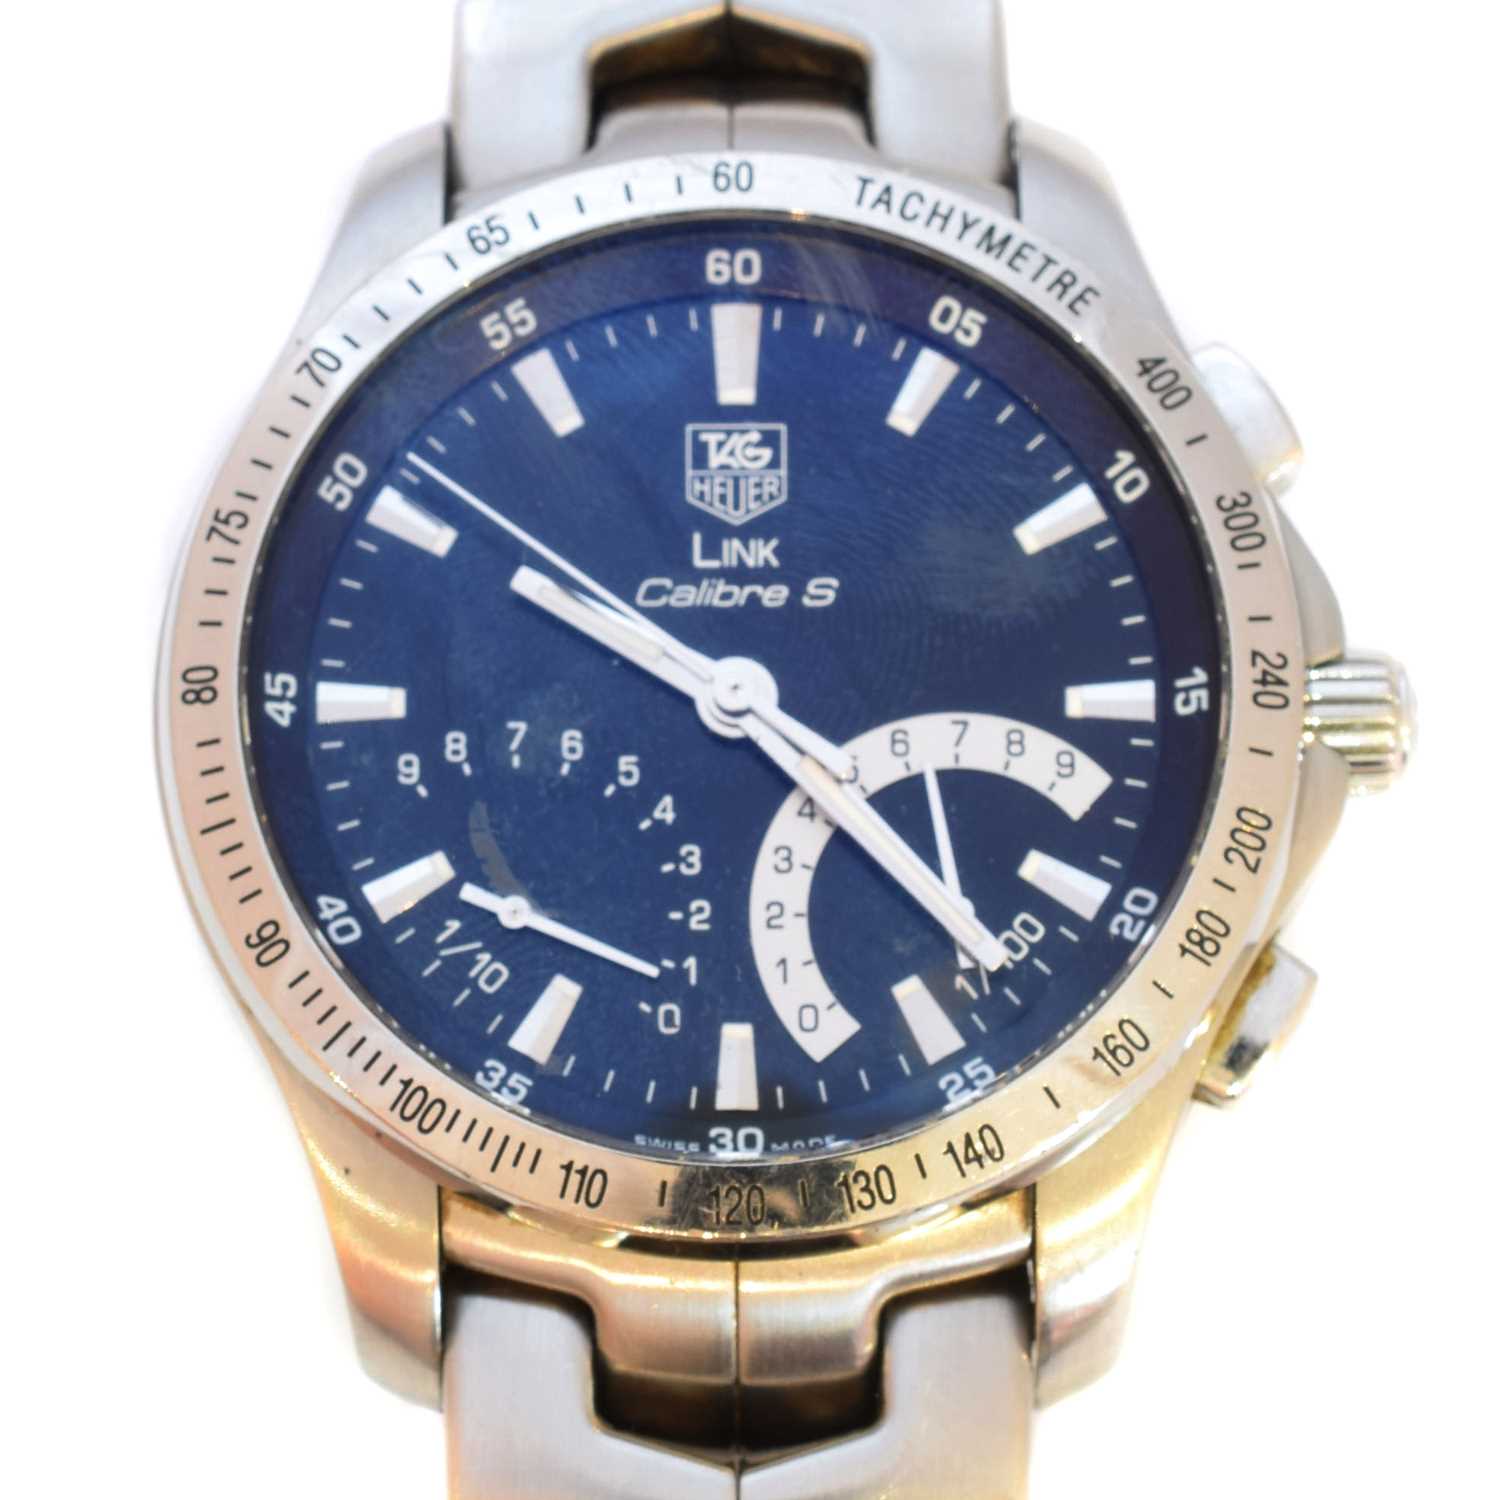 377 - A stainless steel Tag Heuer Carrera S quartz wristwatch,